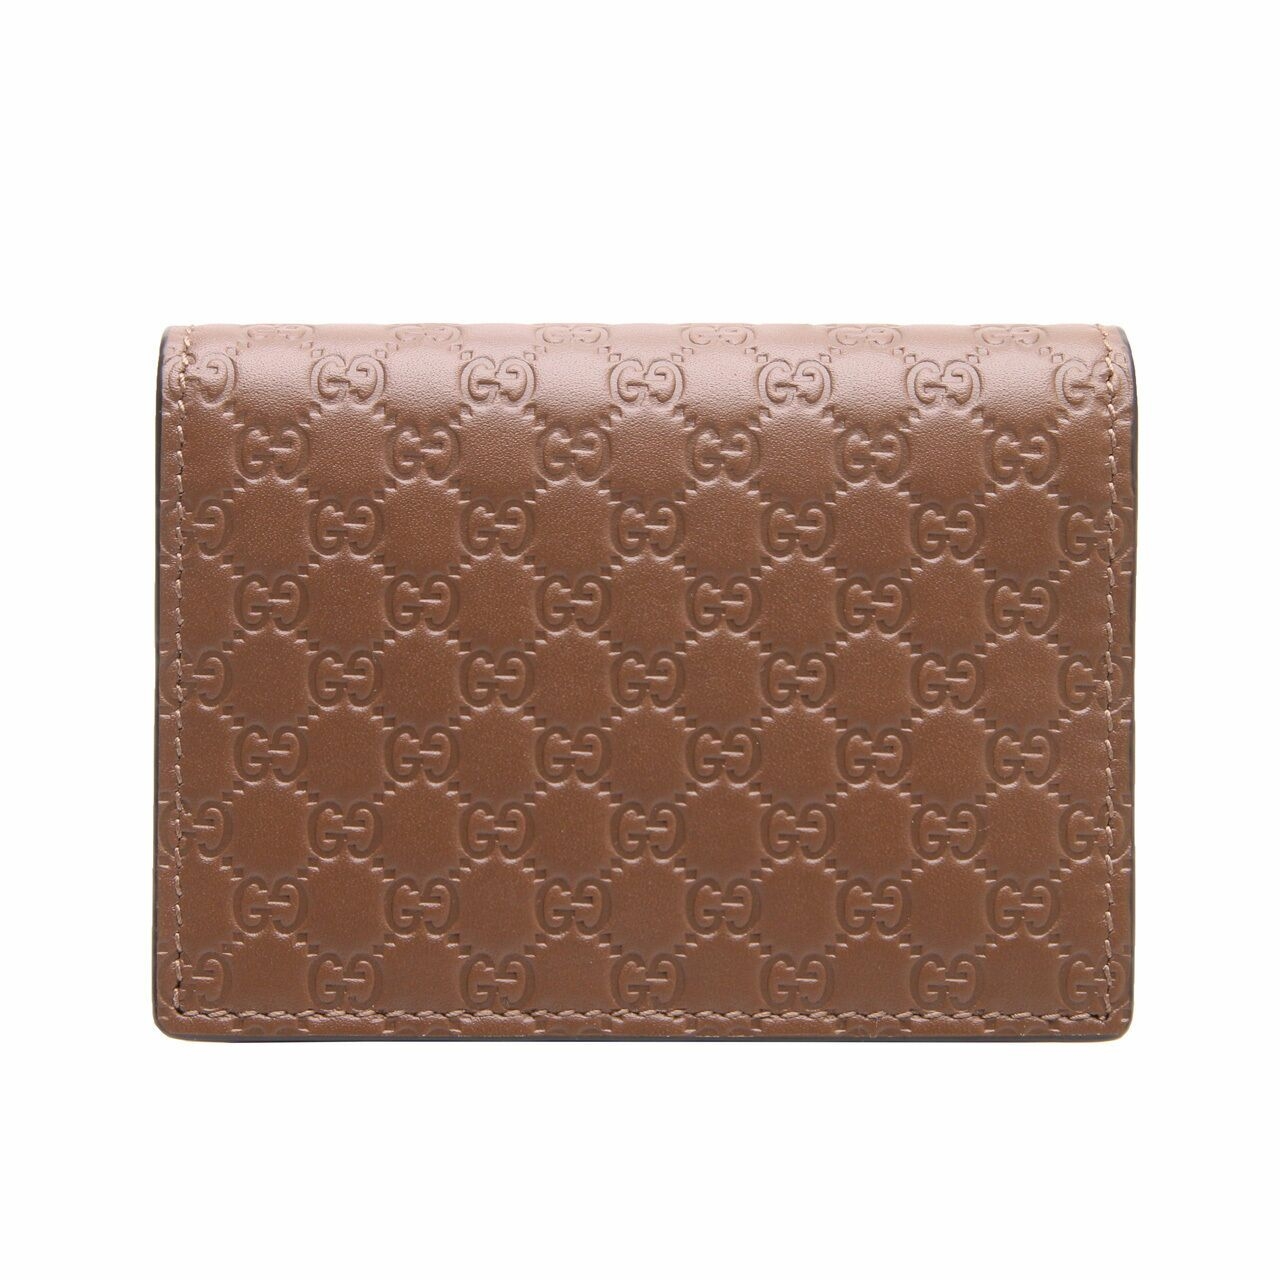 Gucci Microguccisima Brown Card Case Wallet